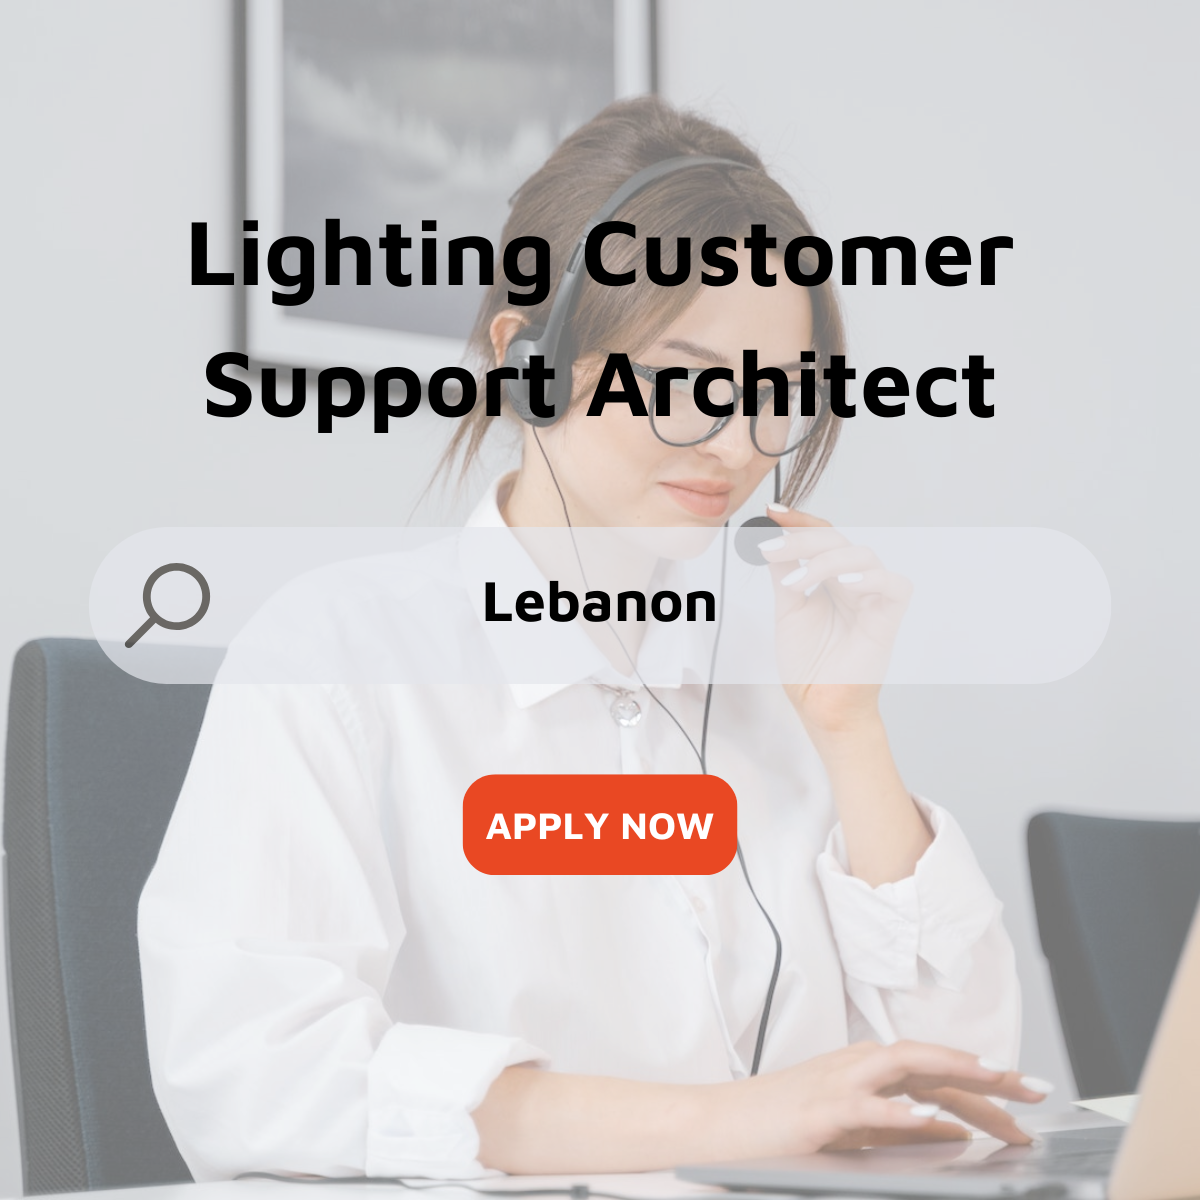 Lighting Customer Support Architect